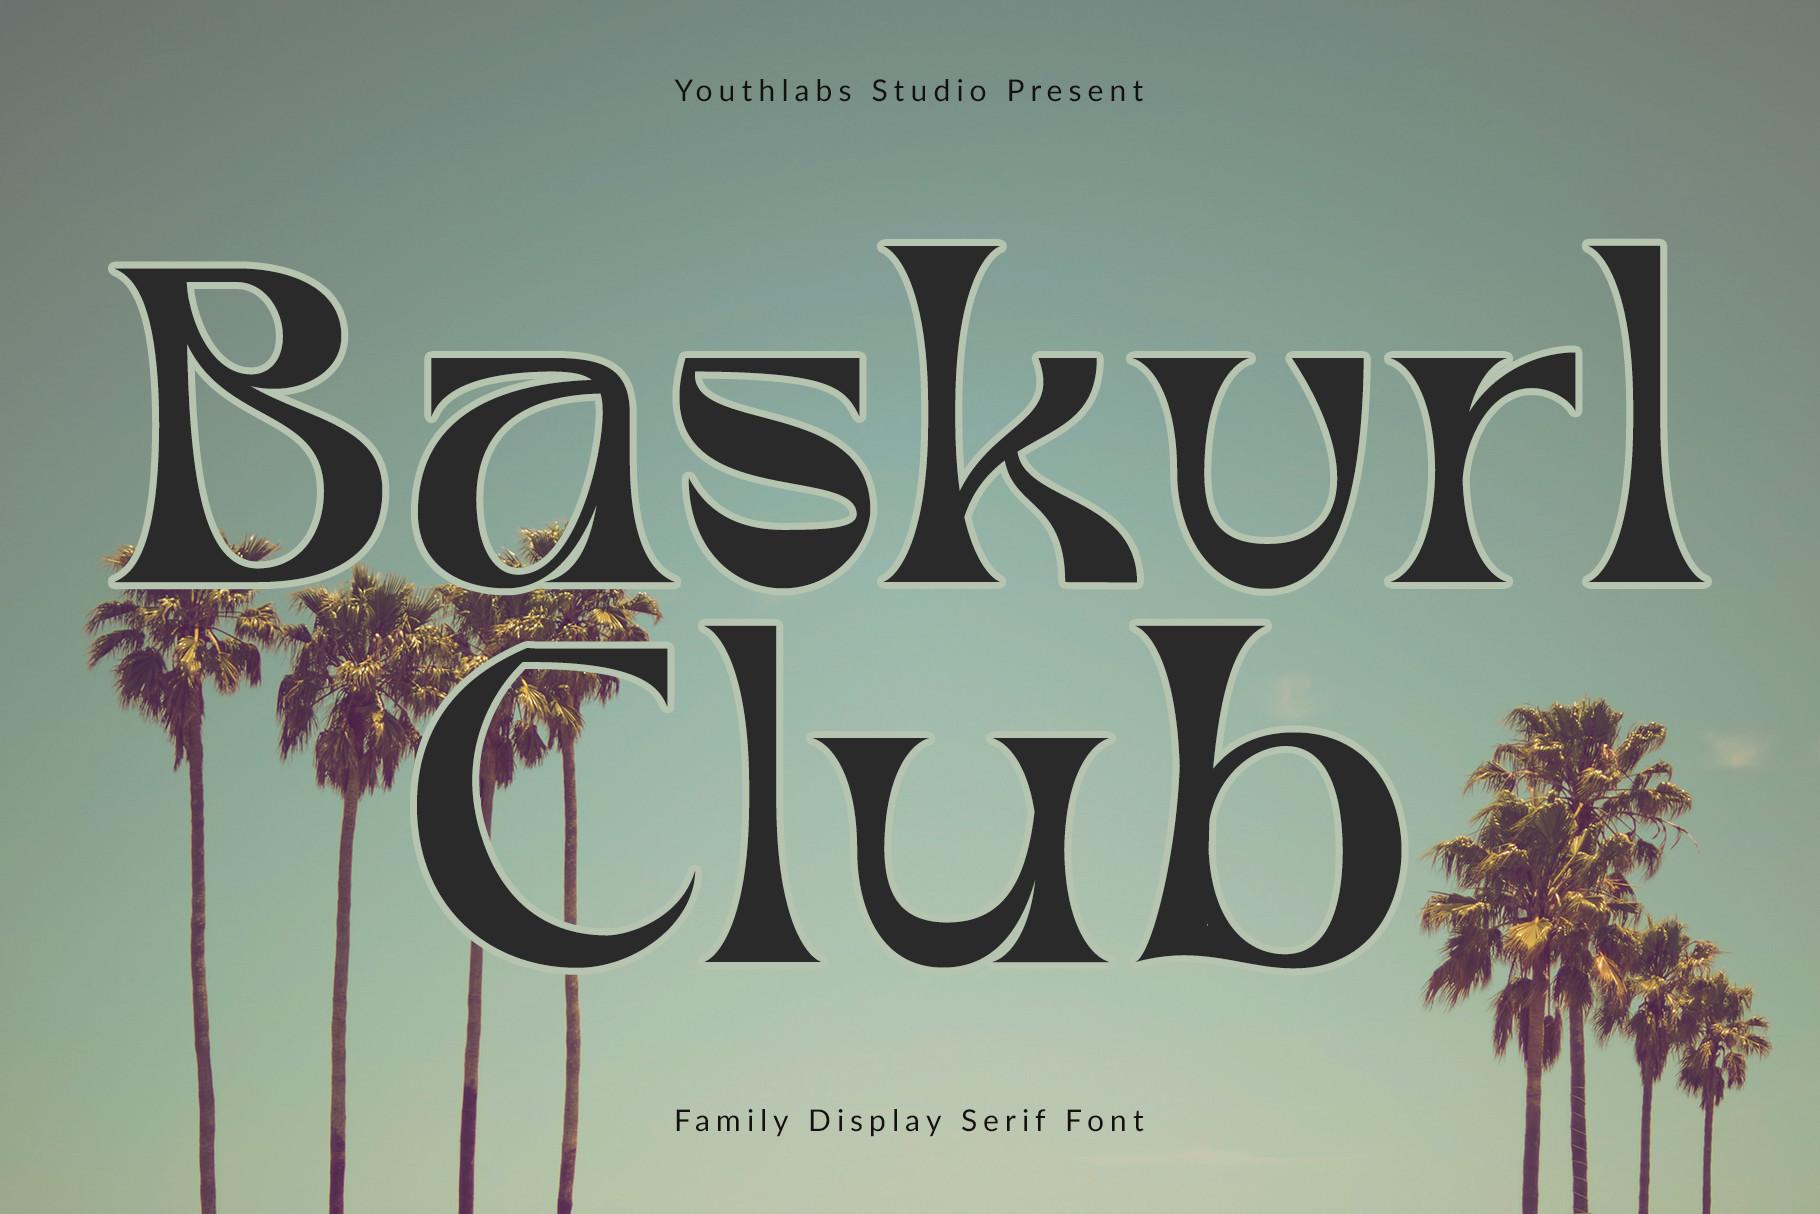 Baskvrl Club Font